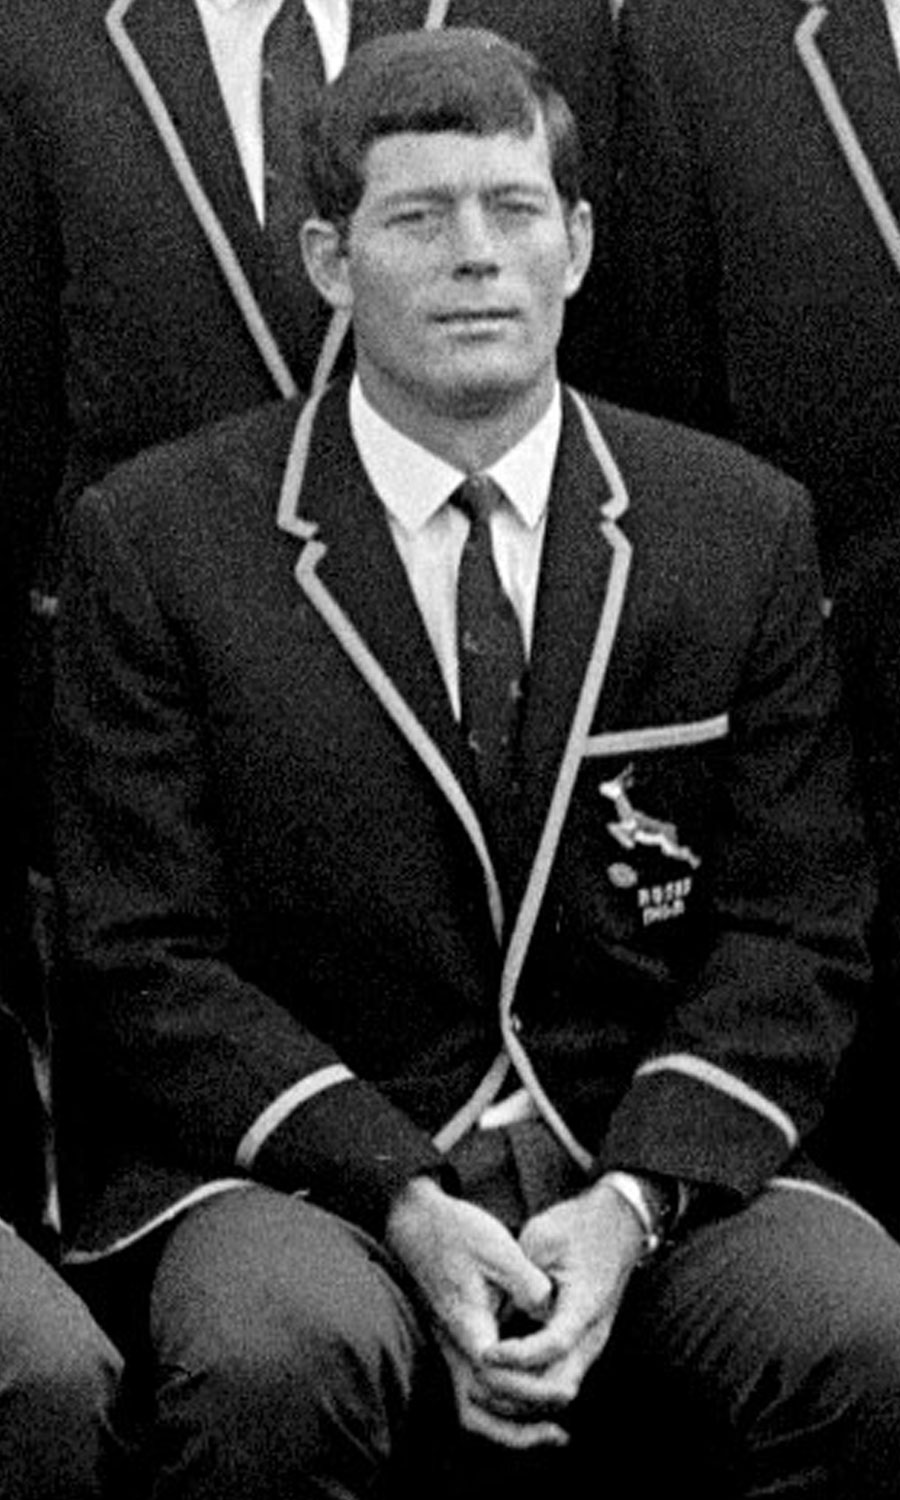 Jan Ellis pictured at the start of the Springboks tour